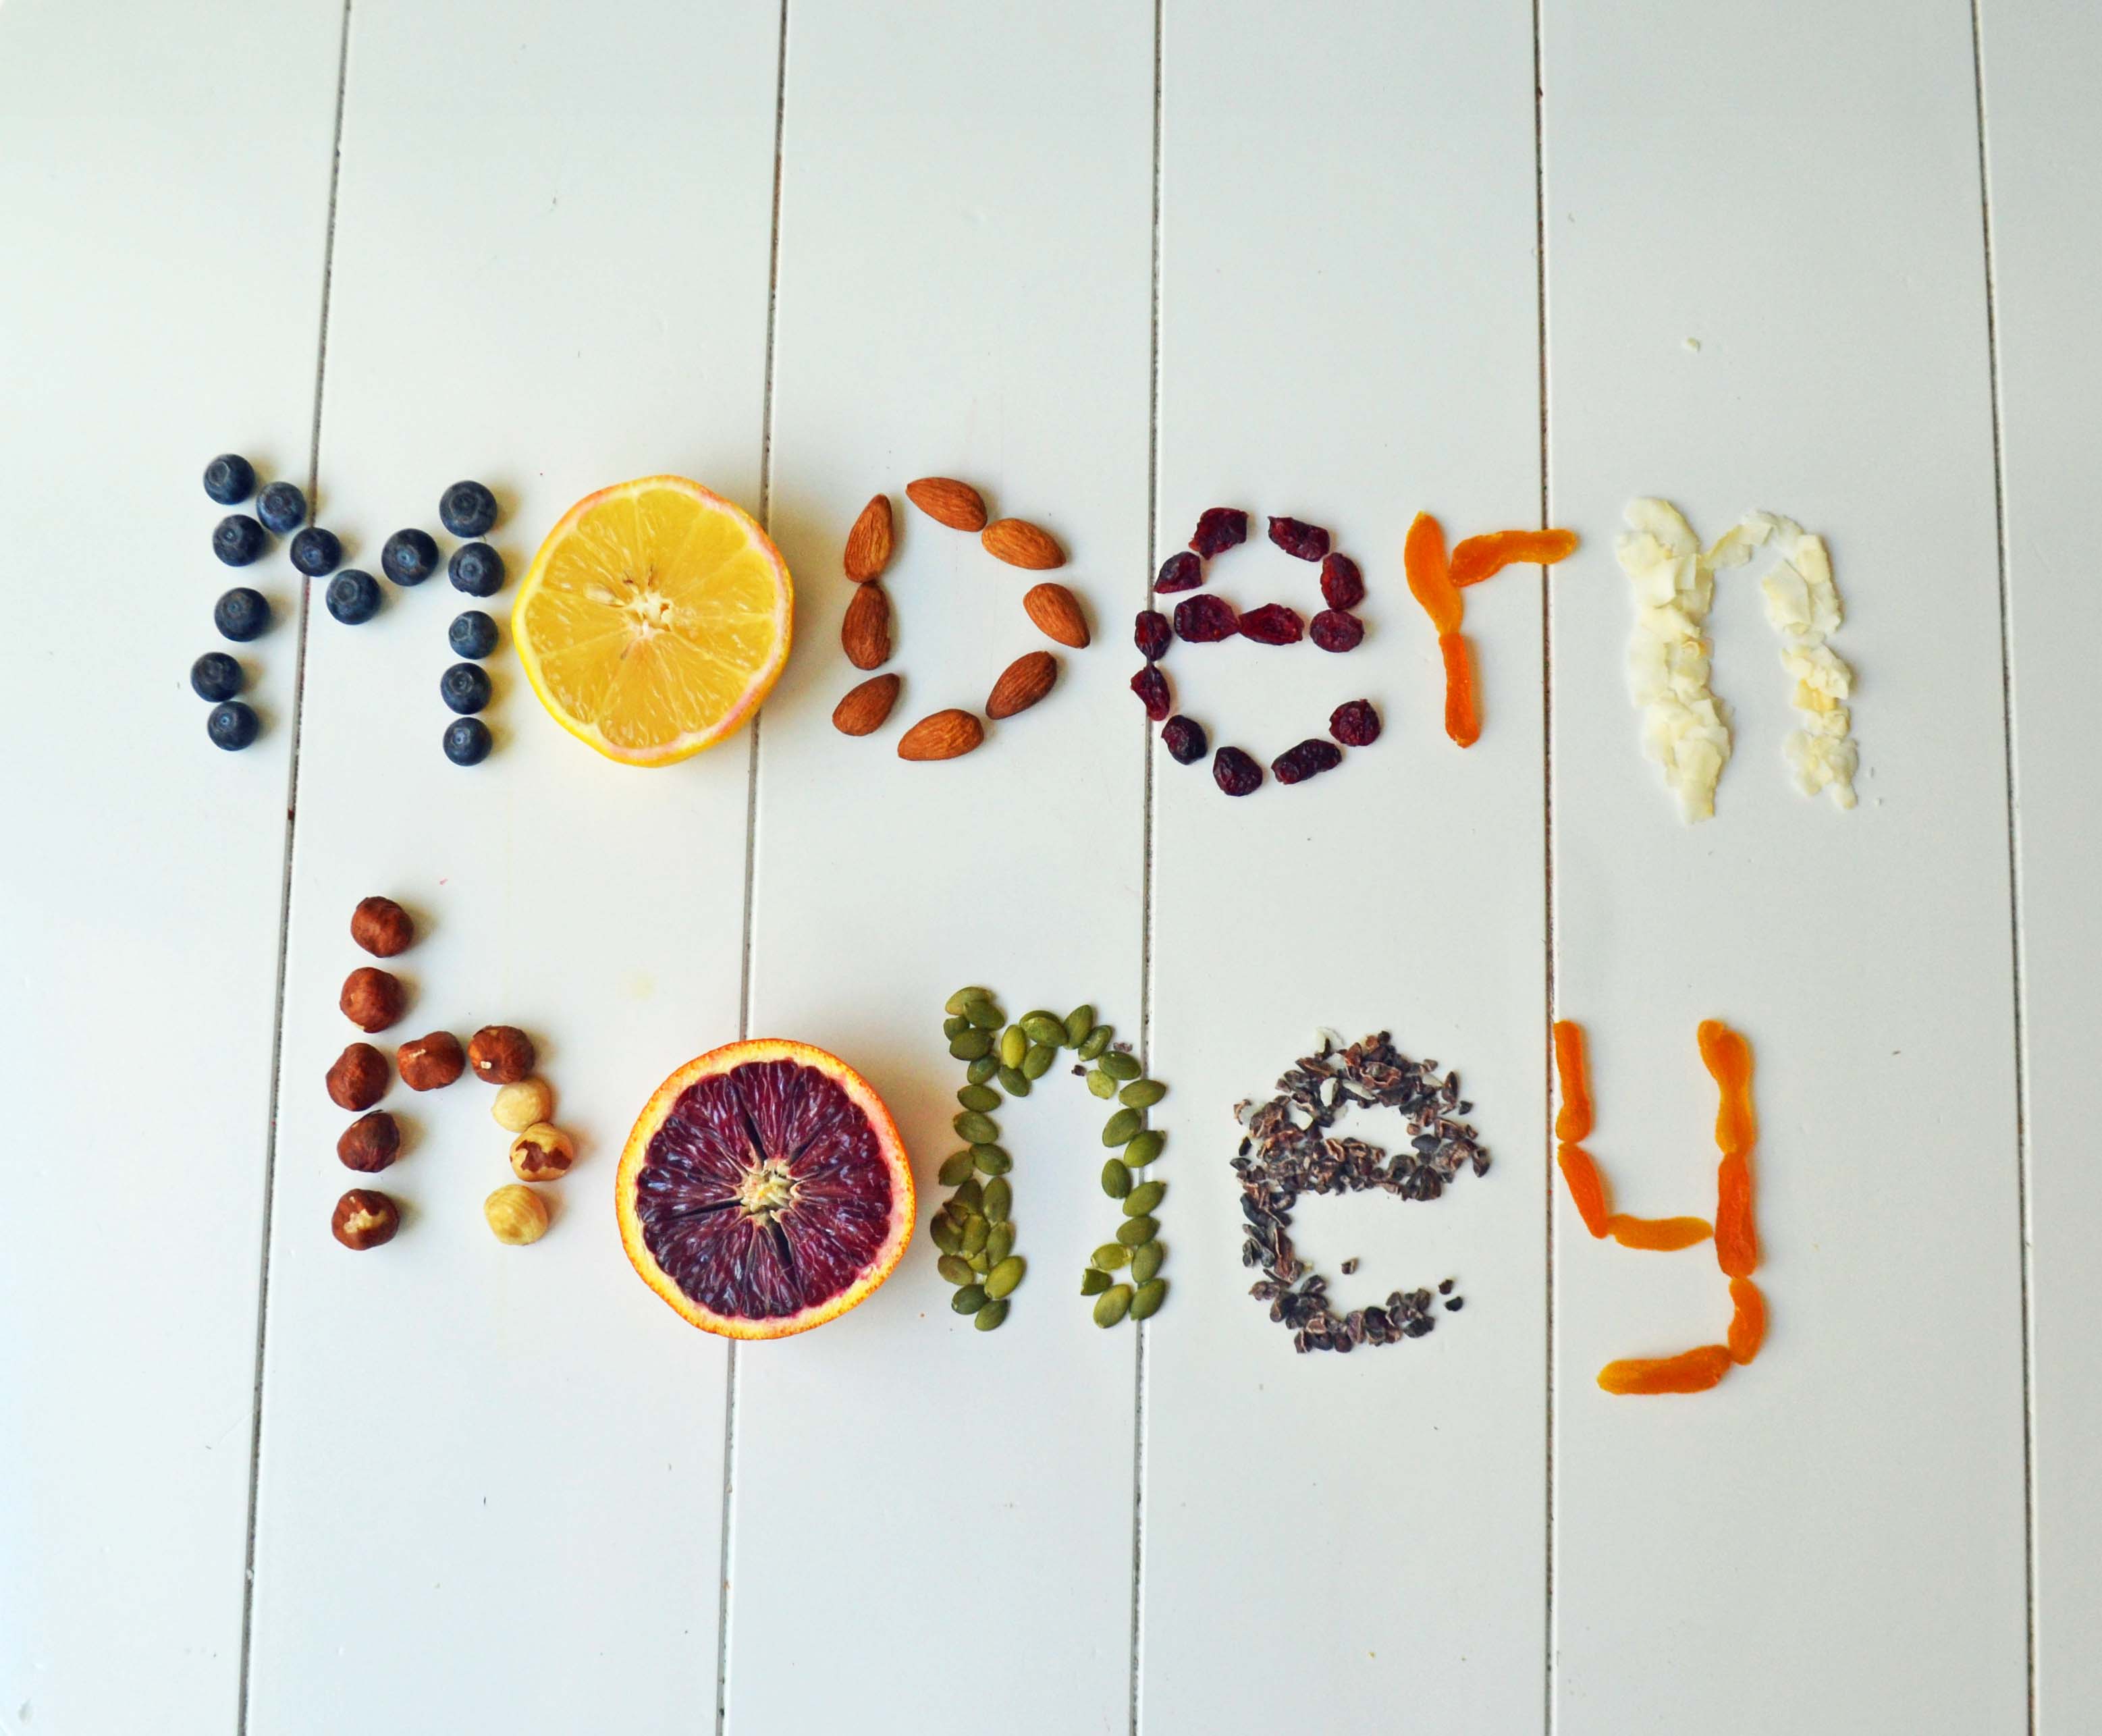 6 Healthy Superfood Smoothies by Modern Honey - www.modernhoney.com